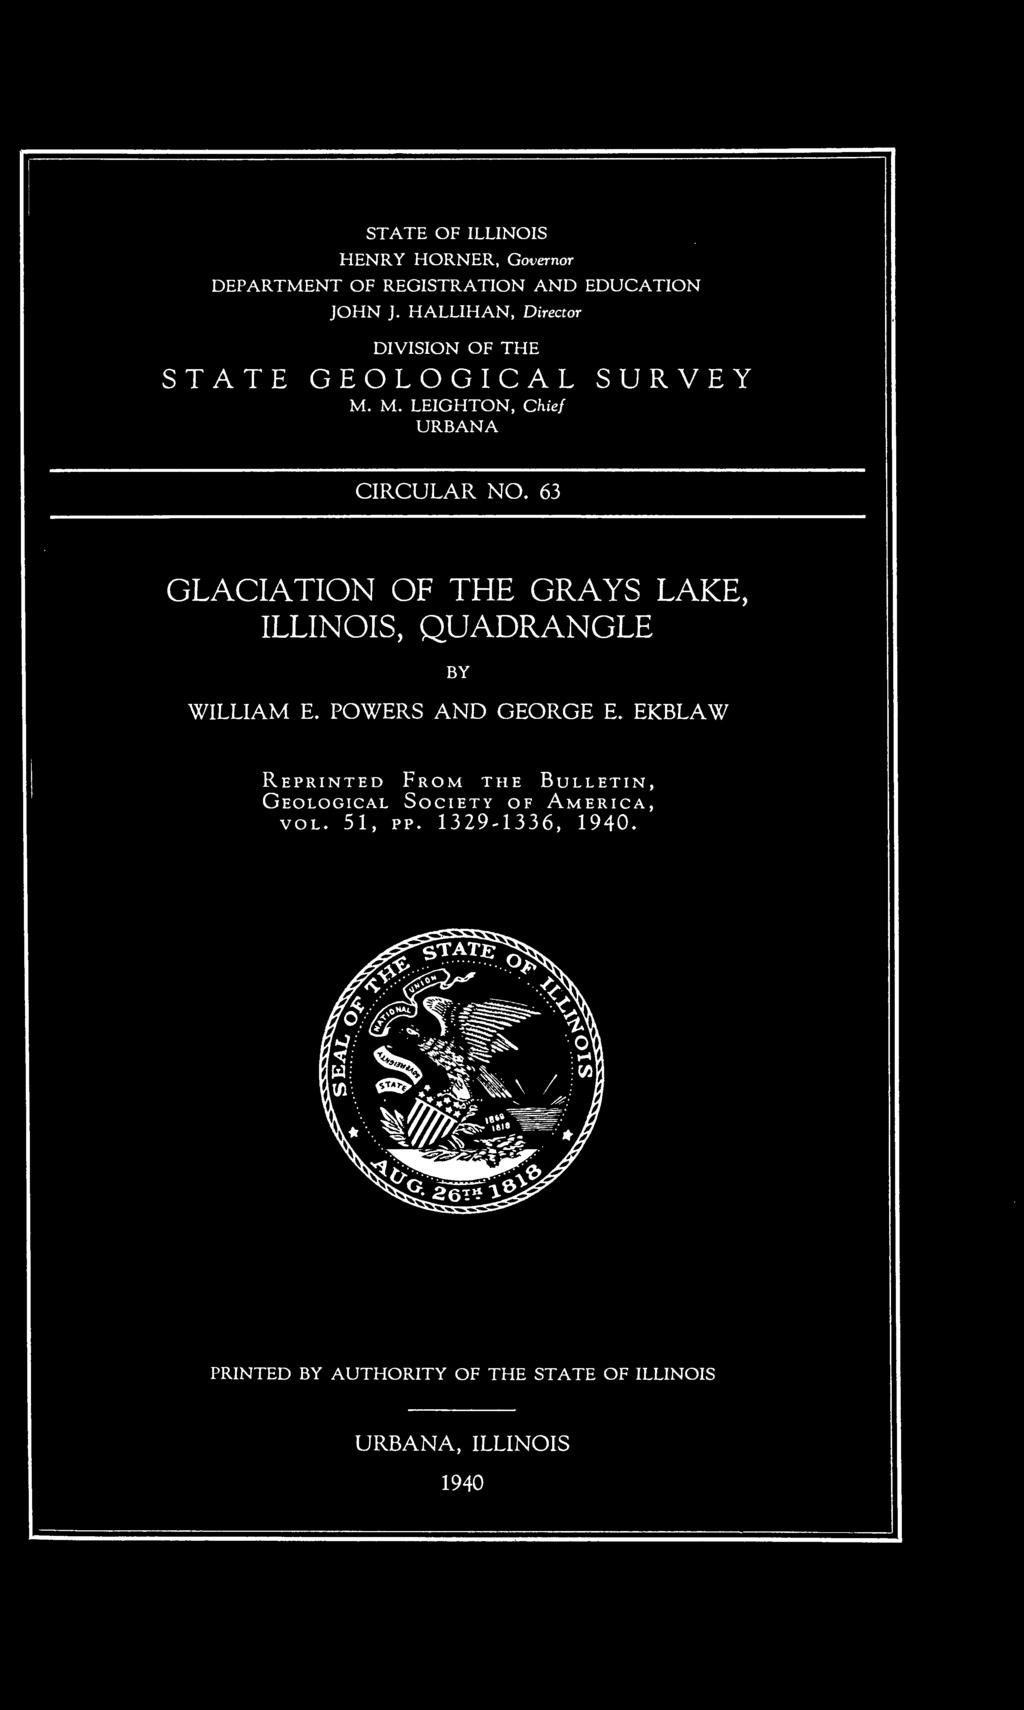 63 GLACIATION OF THE GRAYS LAKE, ILLINOIS, QUADRANGLE BY WILLIAM E.